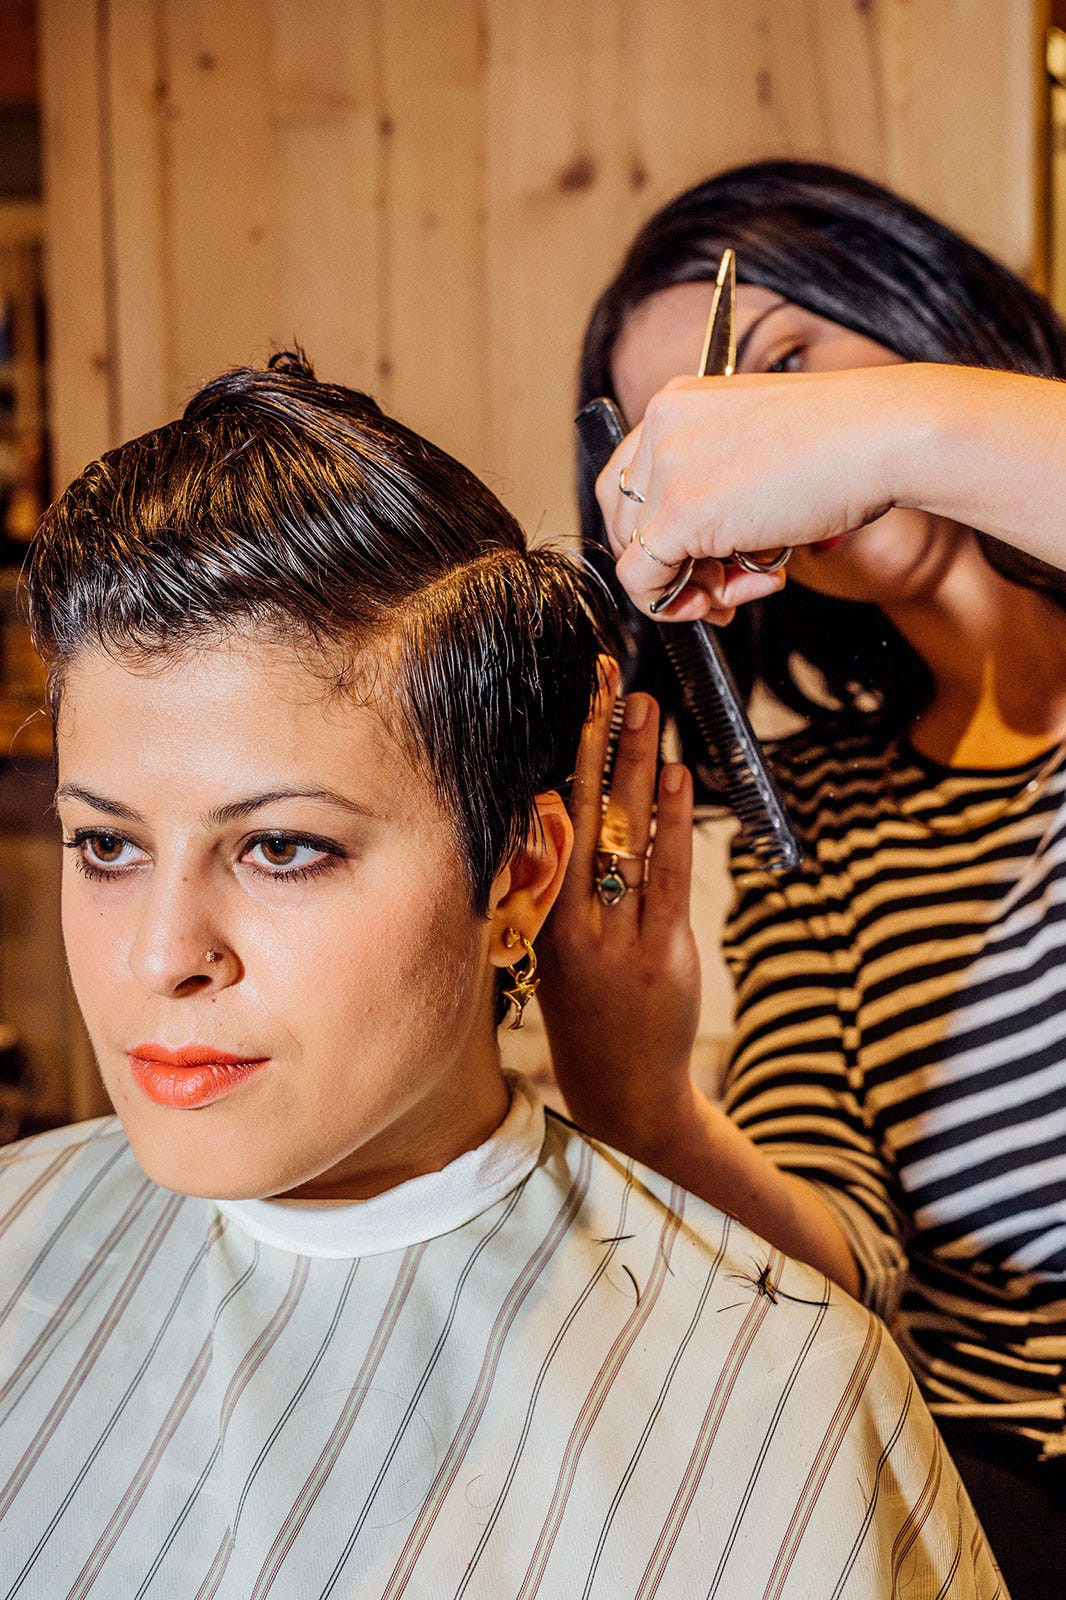 Barber Shops That Cut Women'S Hair
 Womens Barber Shop Haircuts